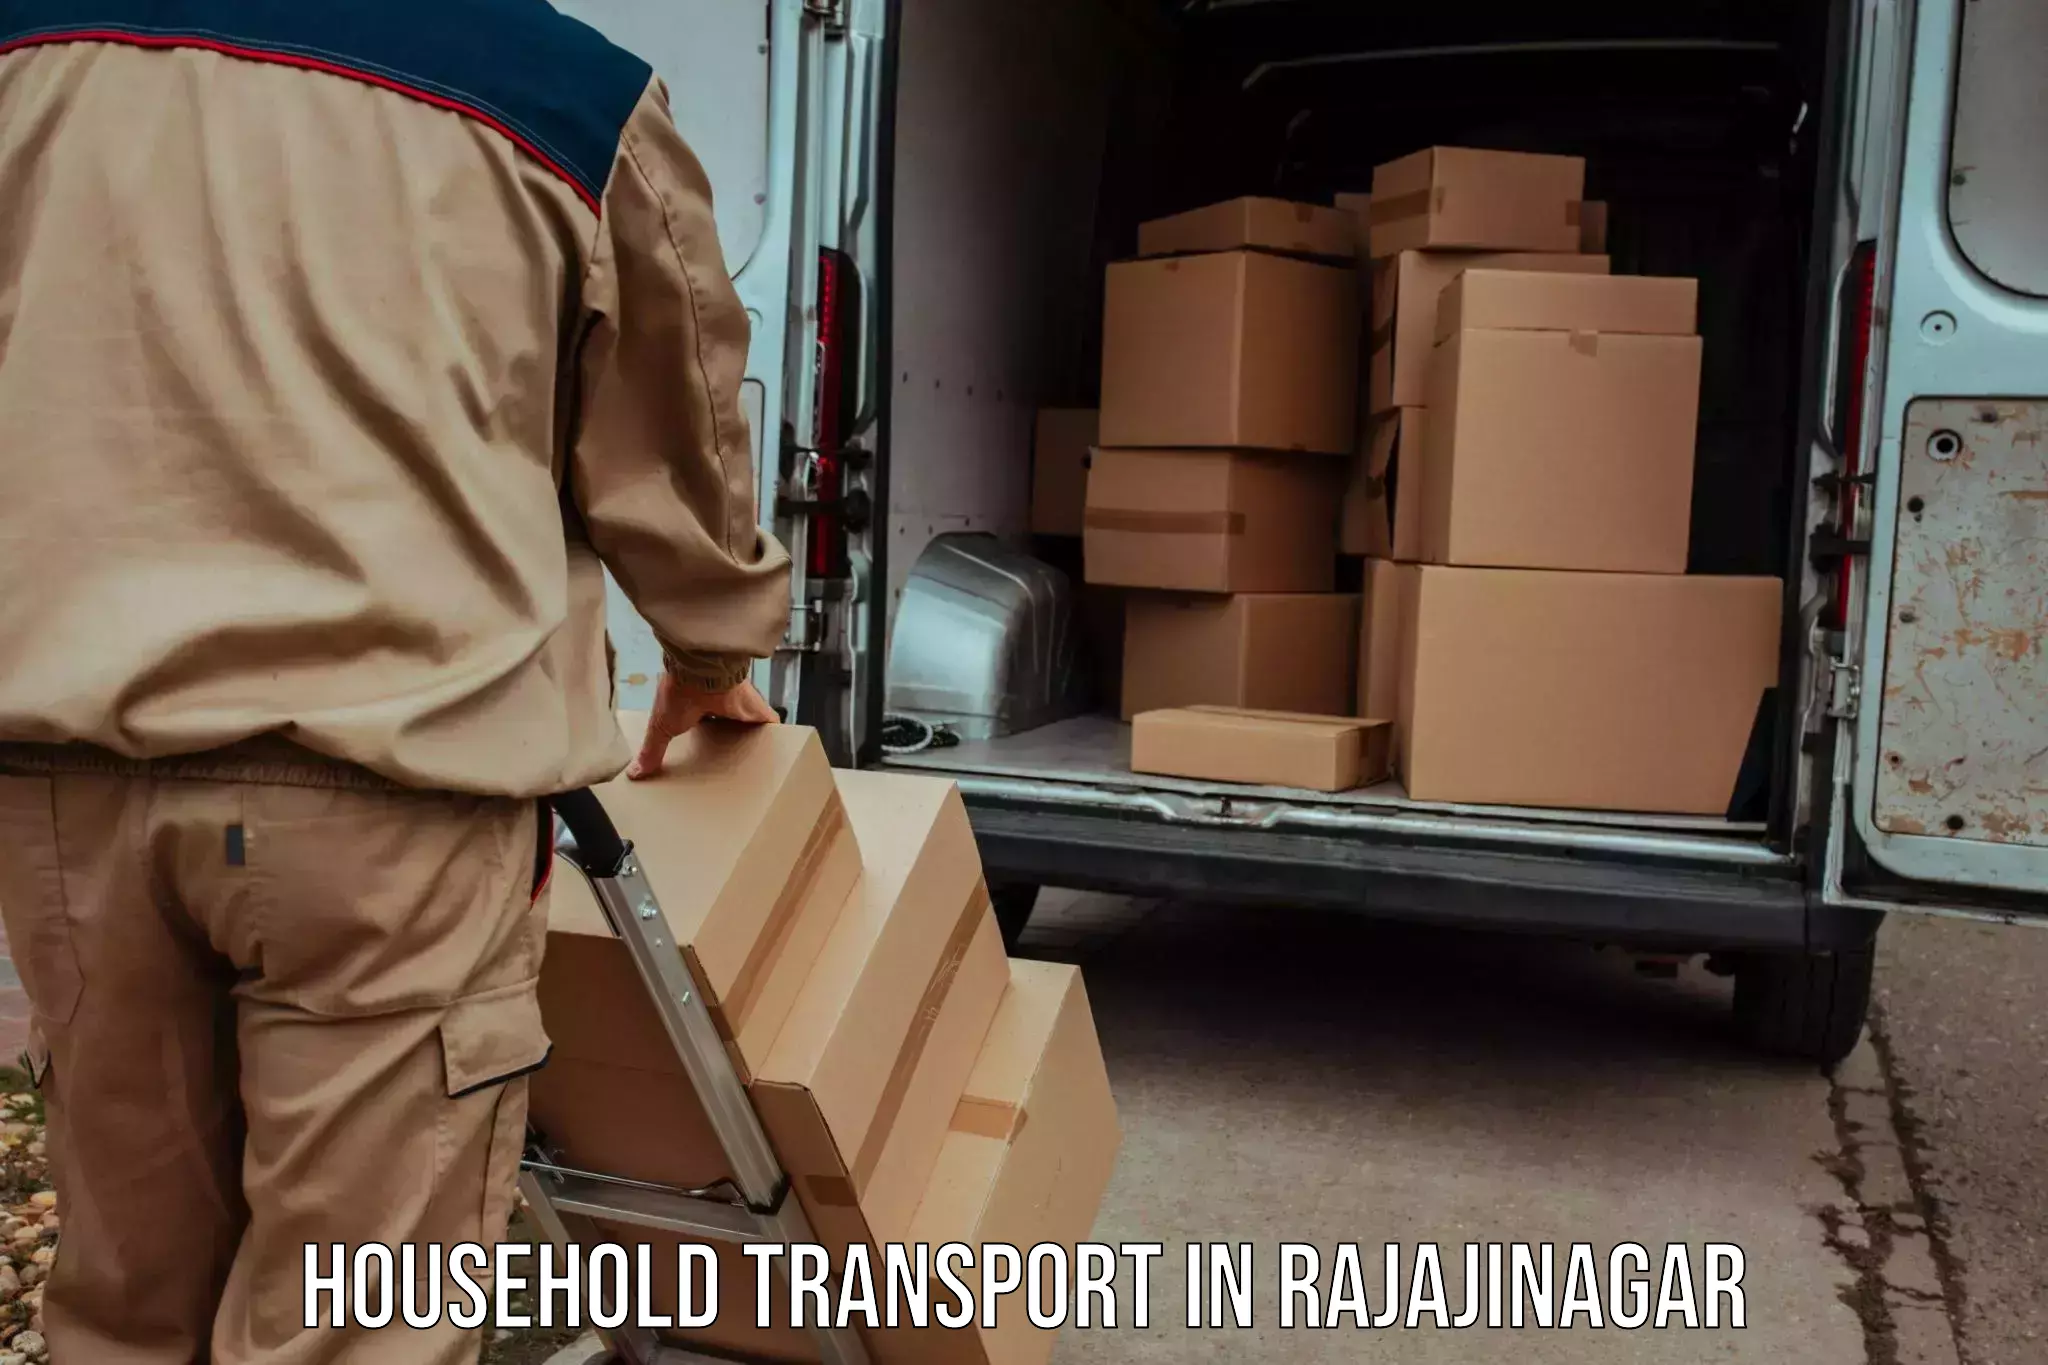 Household transport services in Rajajinagar